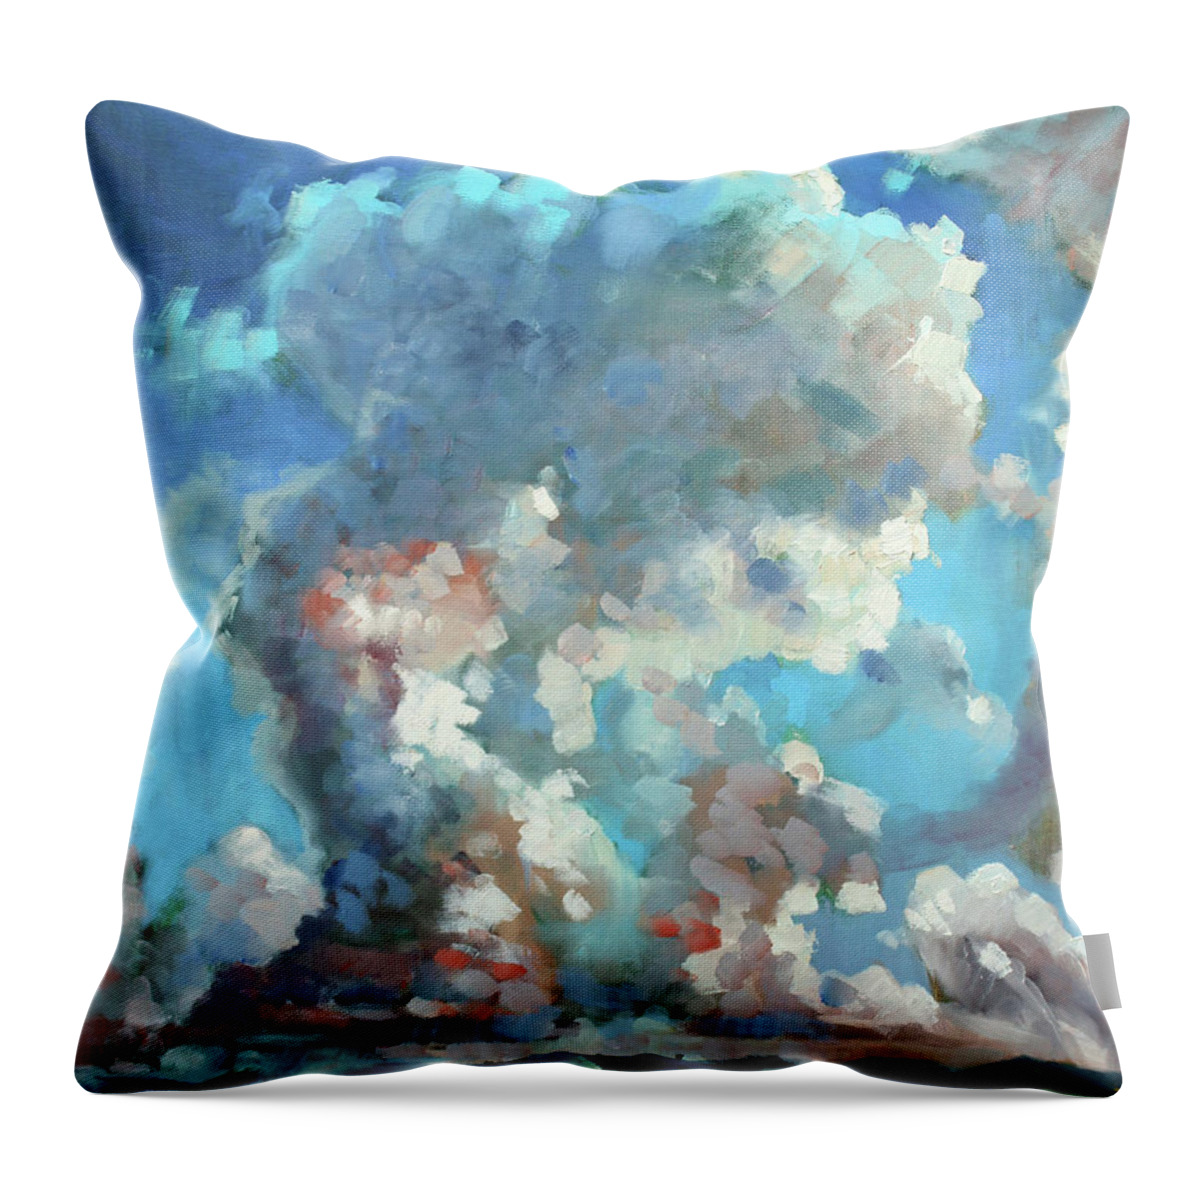 Cumulus Clouds Throw Pillow featuring the painting Virginia Sky by Susan Bradbury